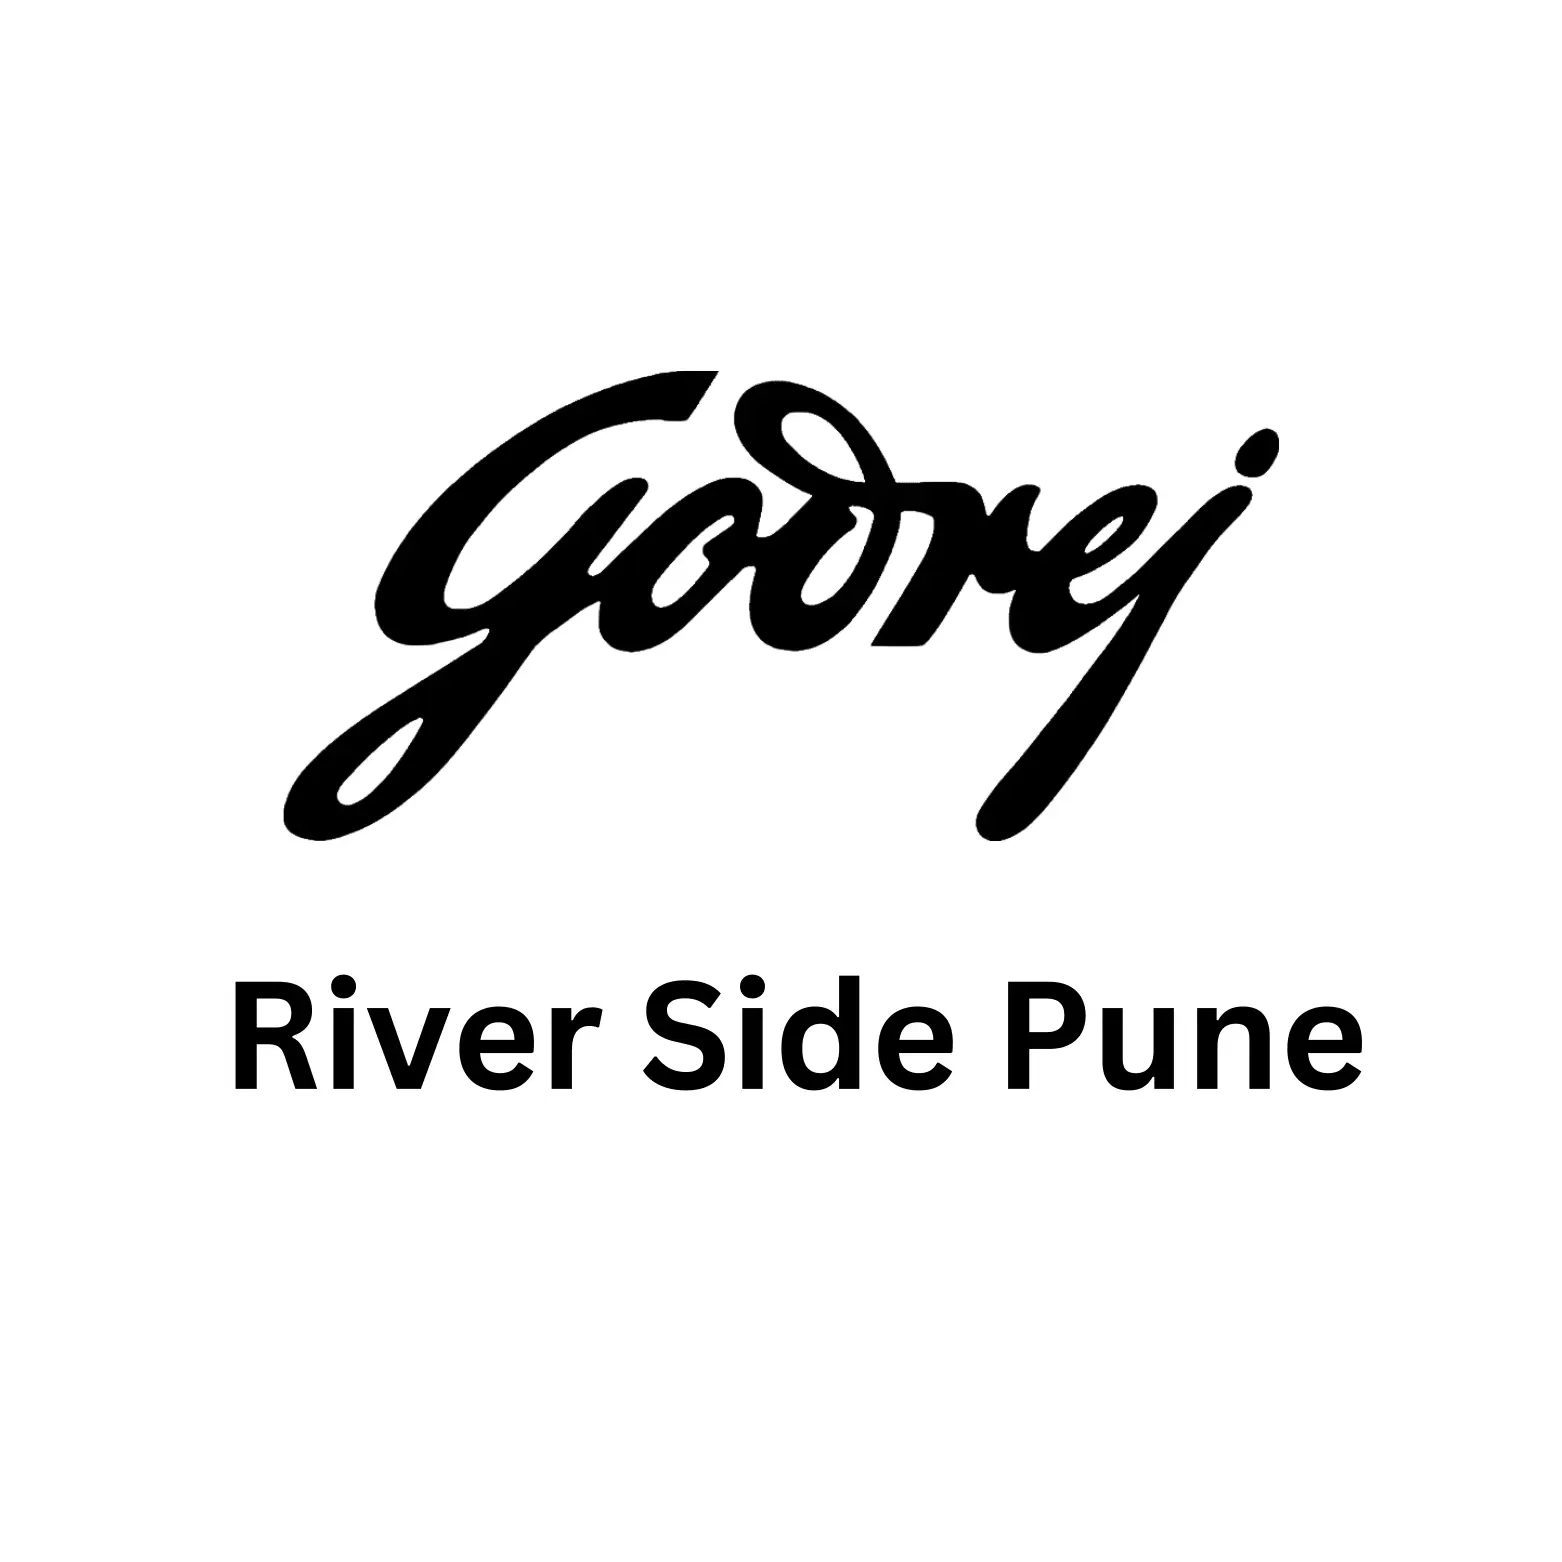 River Side Pune